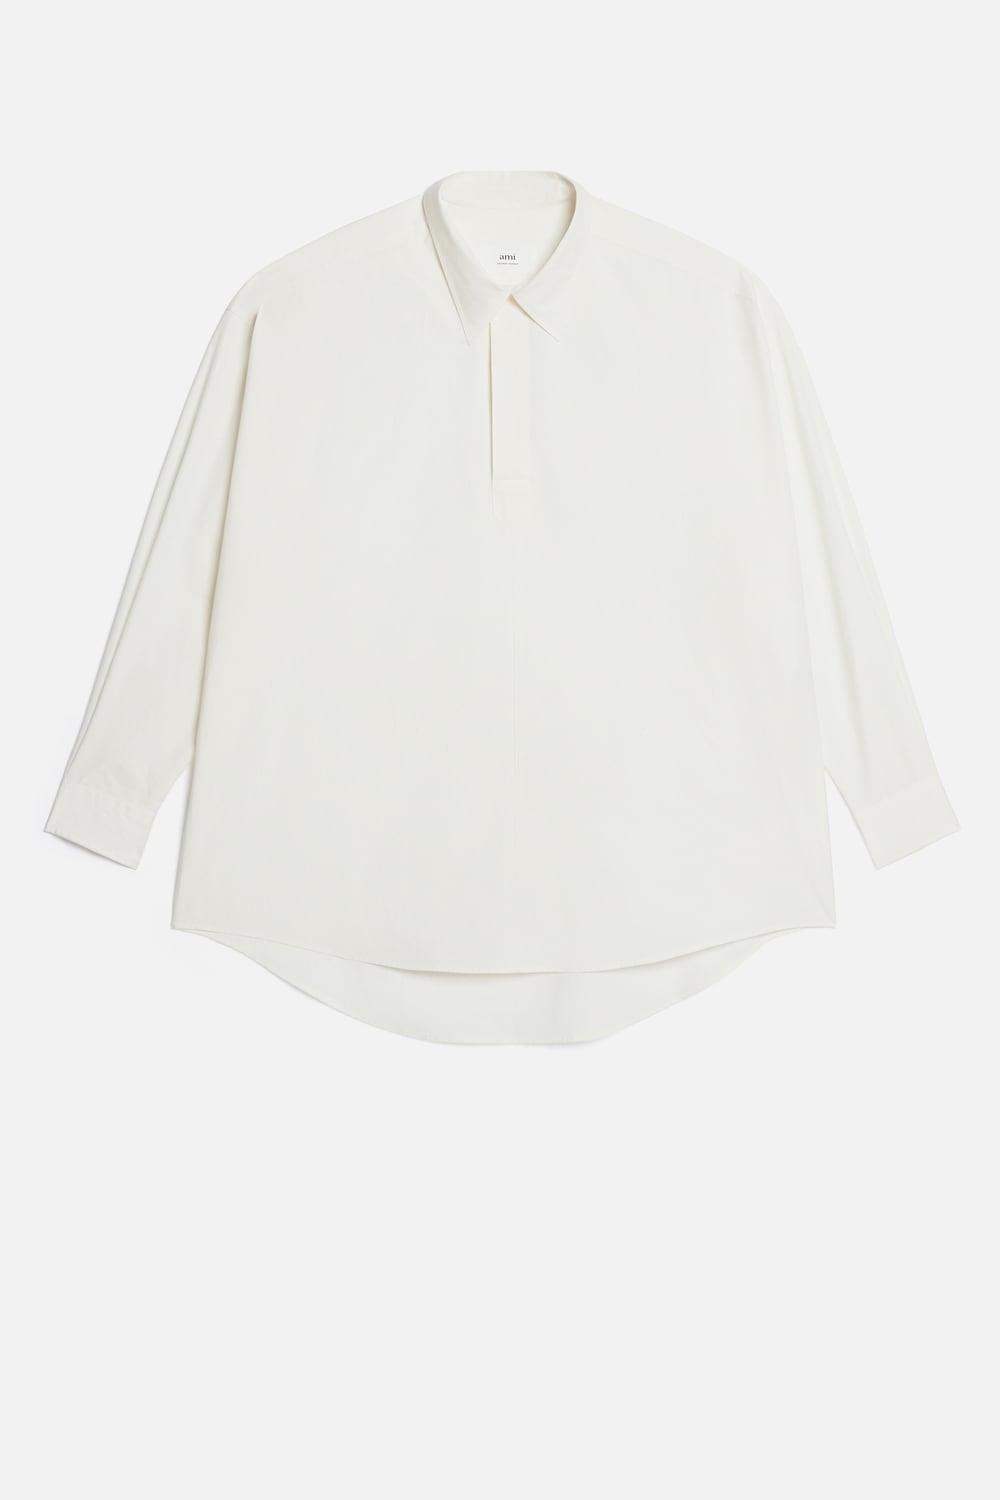 Ami Paris Short Shirt Dress in White | Lyst